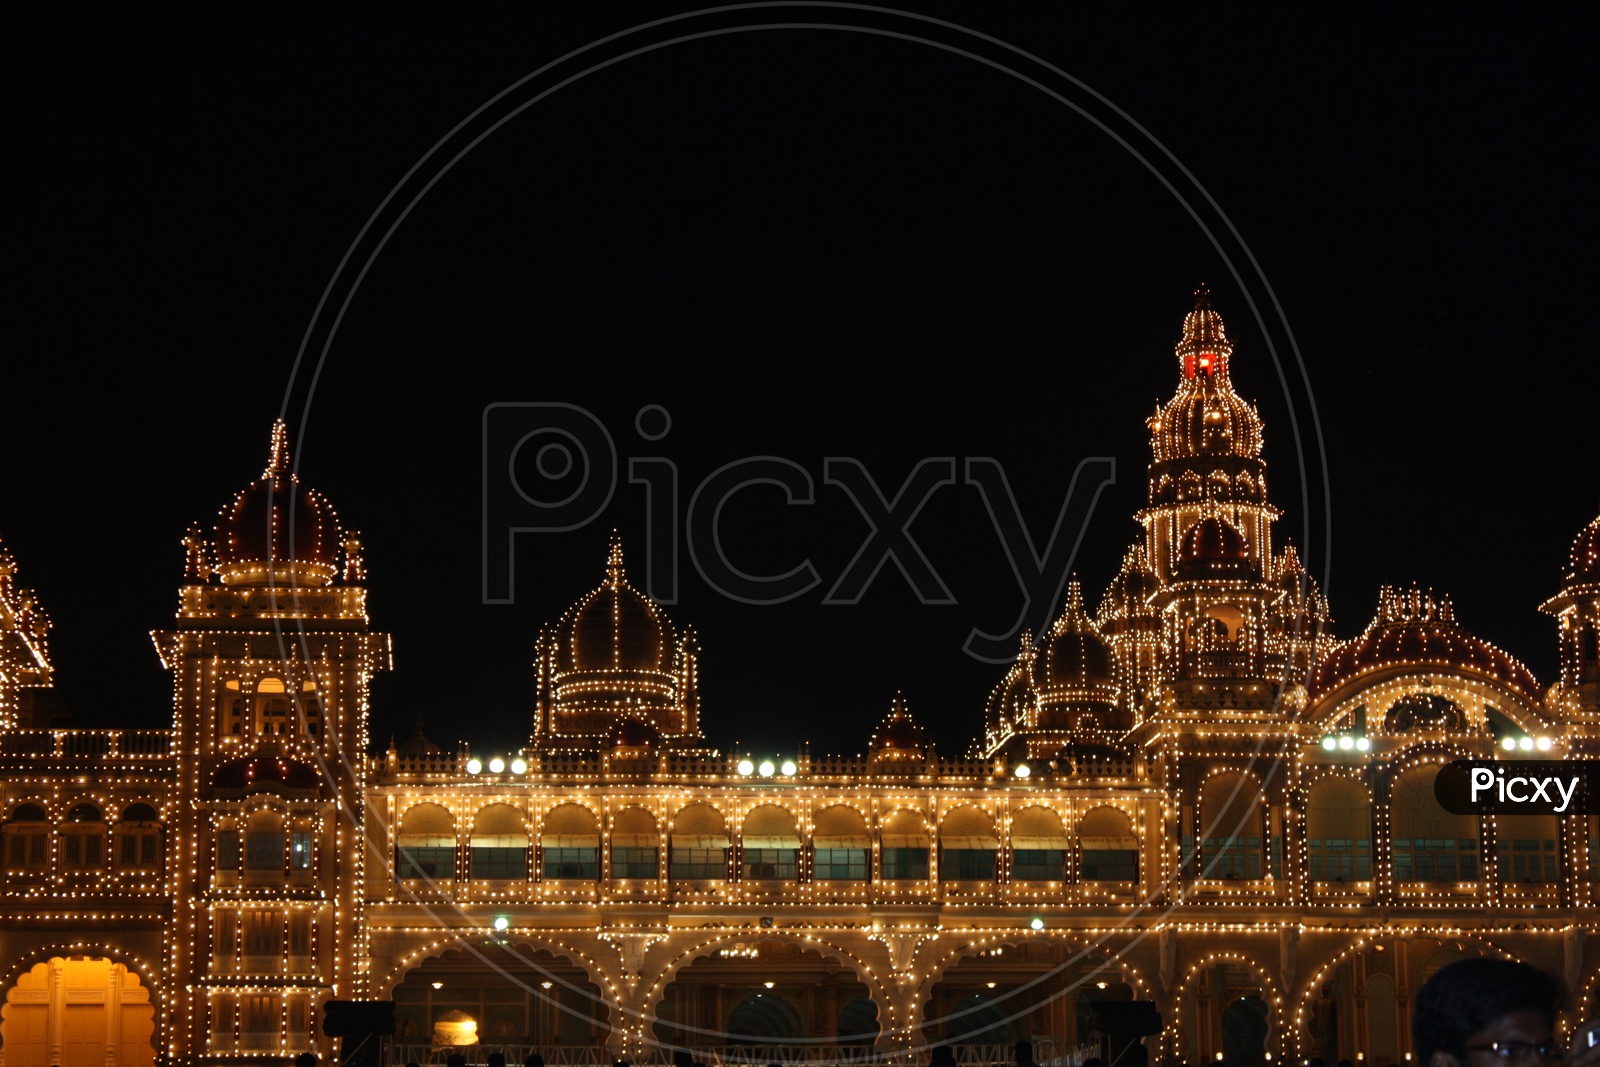 Mysore Palace lit during Dasara